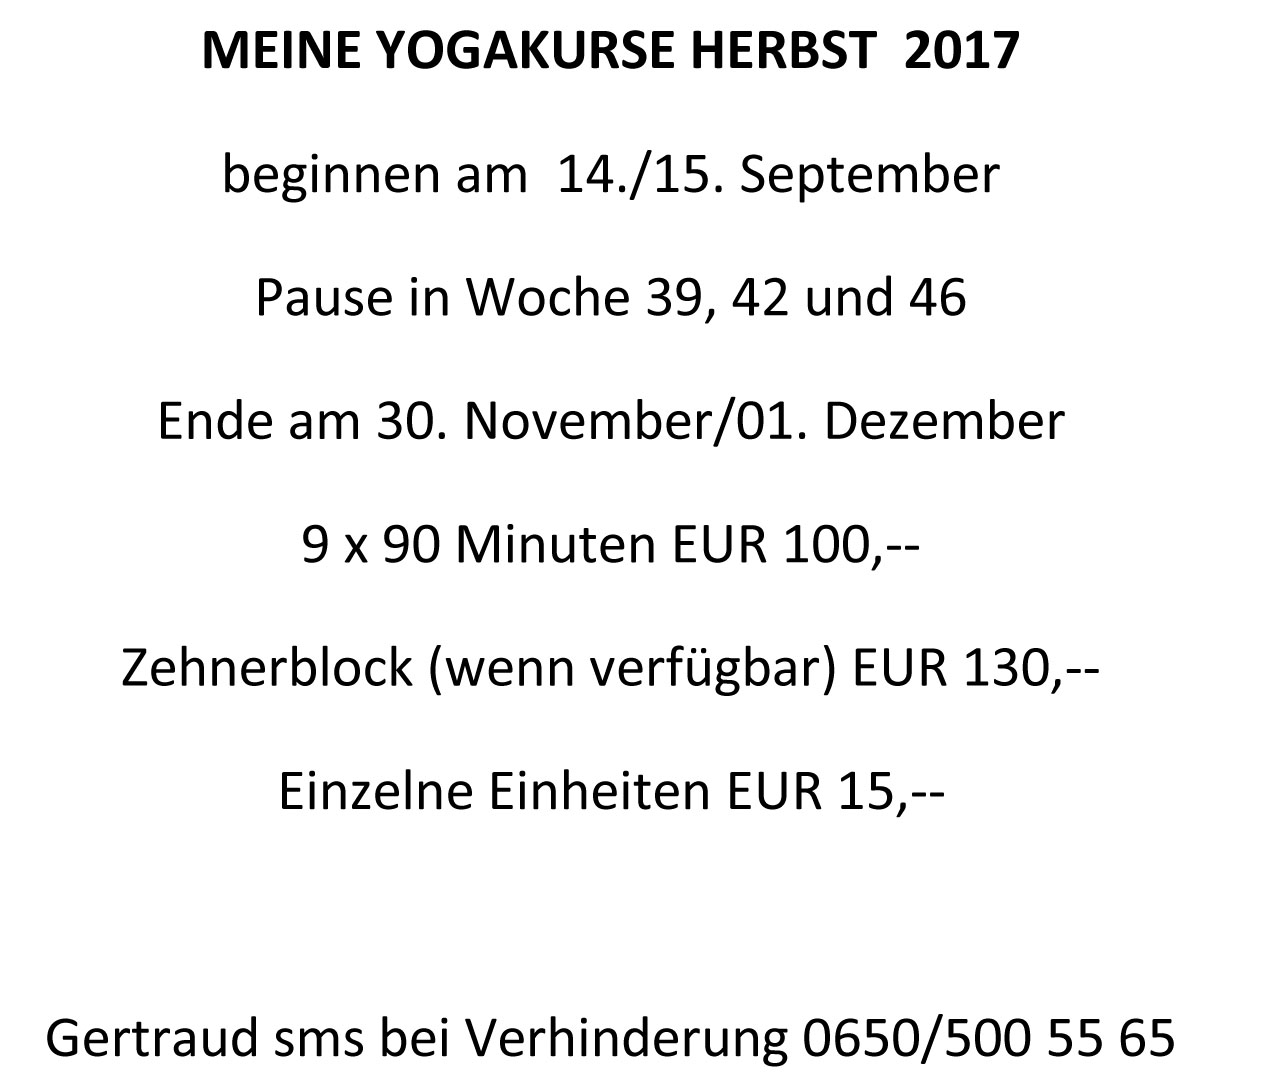 Vorschau Yoga Kurse Kuchl Herbst 2017 Kopie